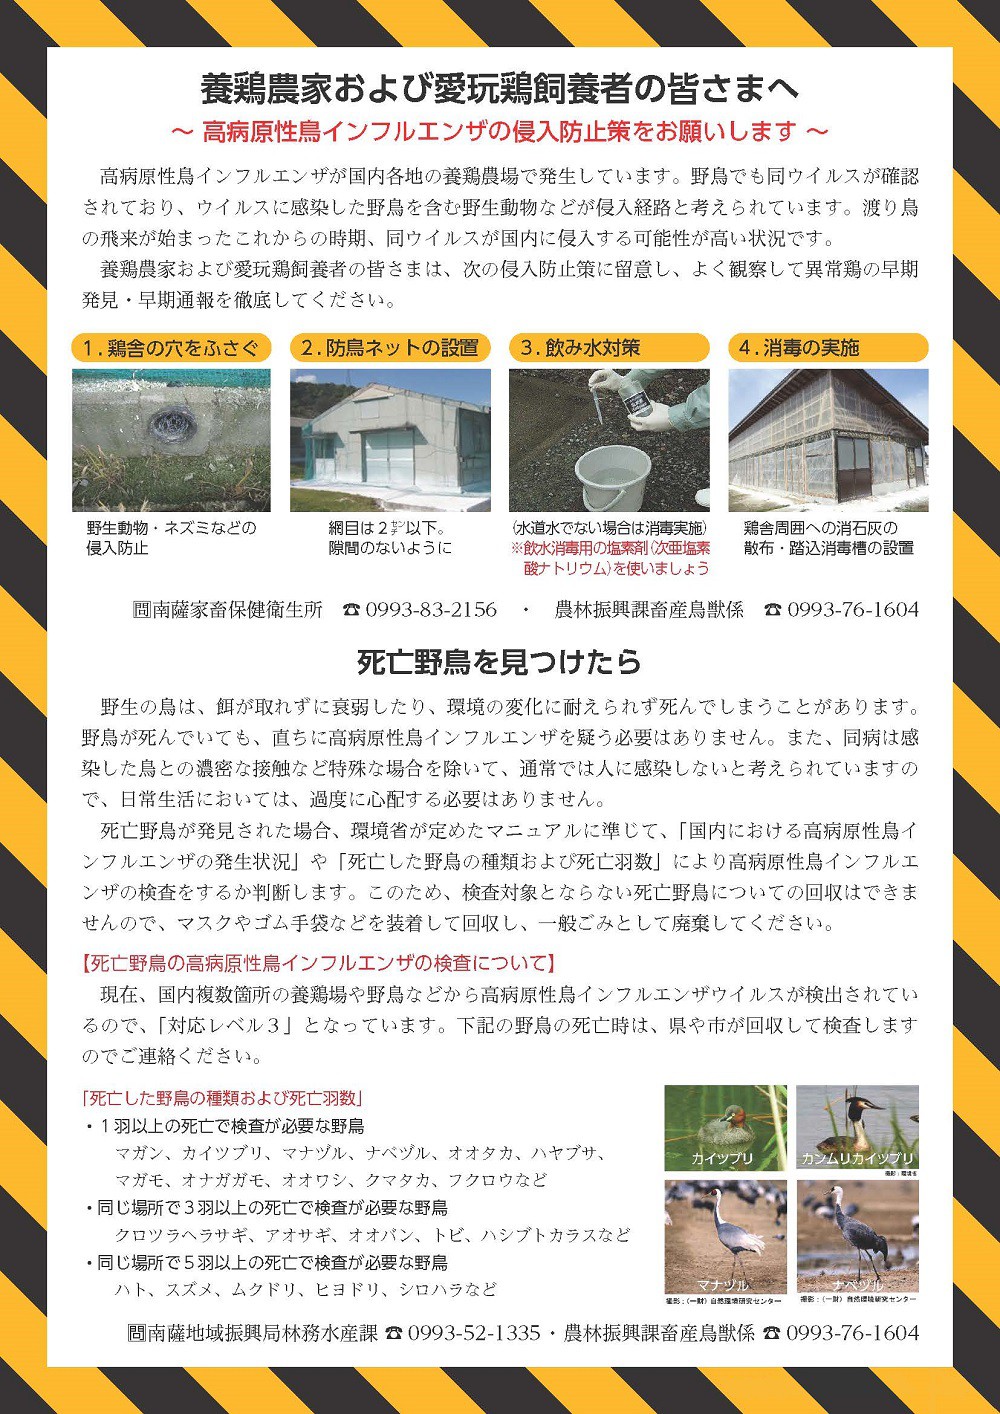 https://www.city.minamisatsuma.lg.jp/living/images/1avianinfluenza20231207.jpg